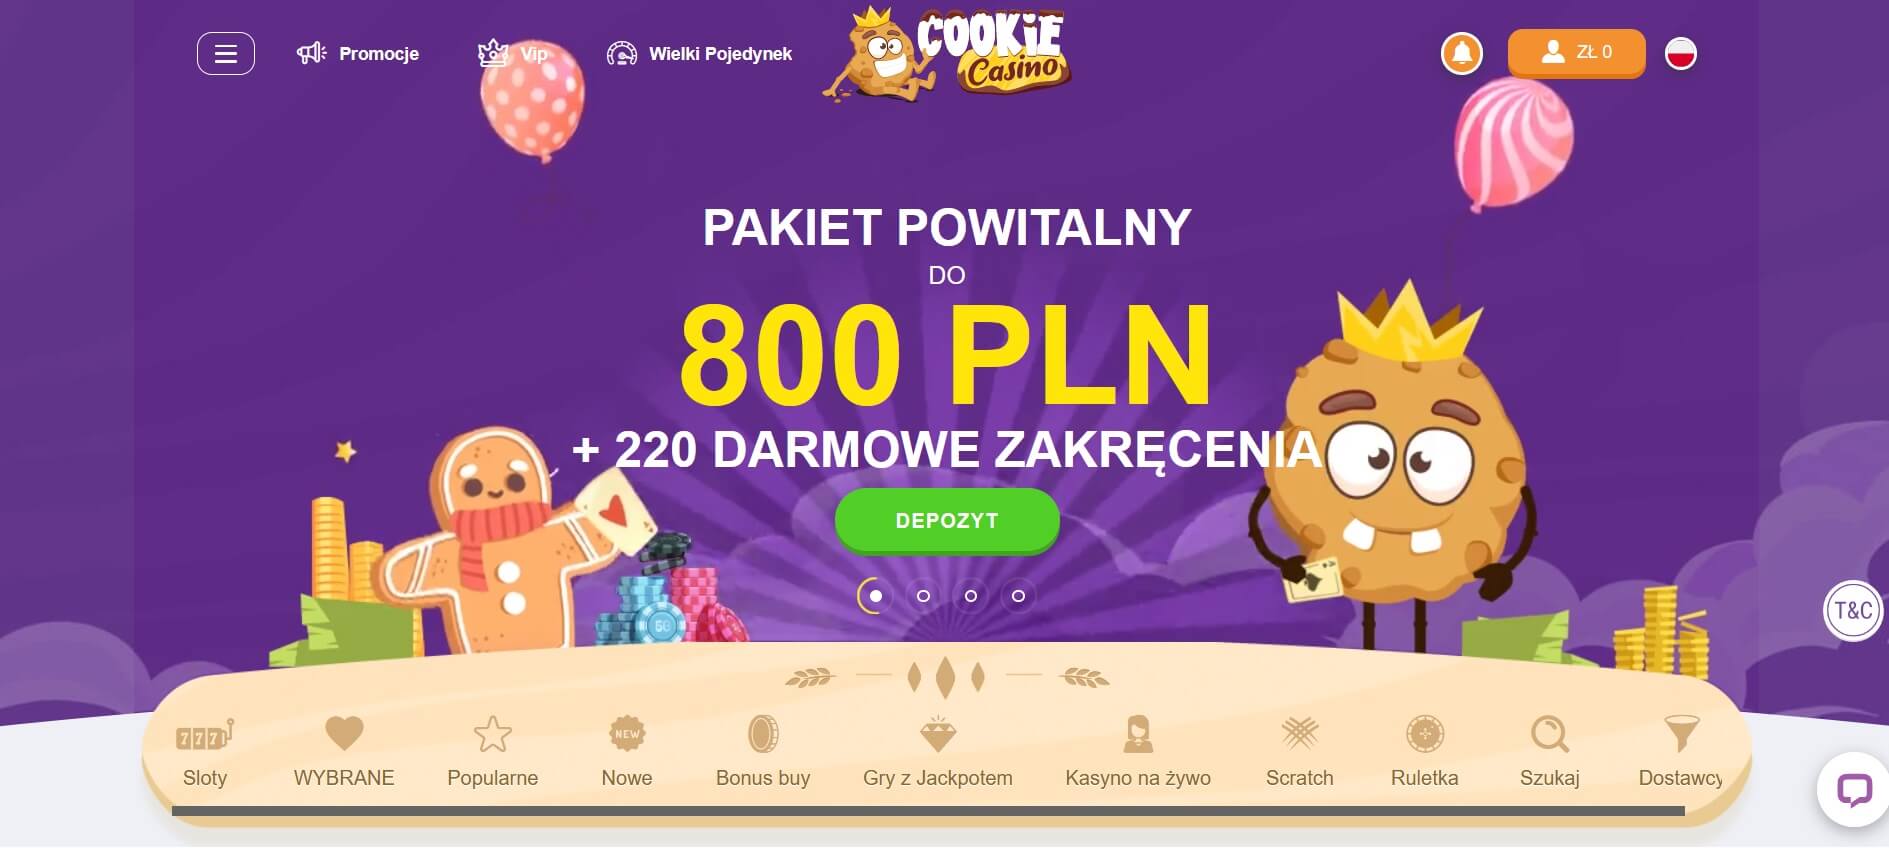 cookie casino bonus powitalny screenshot